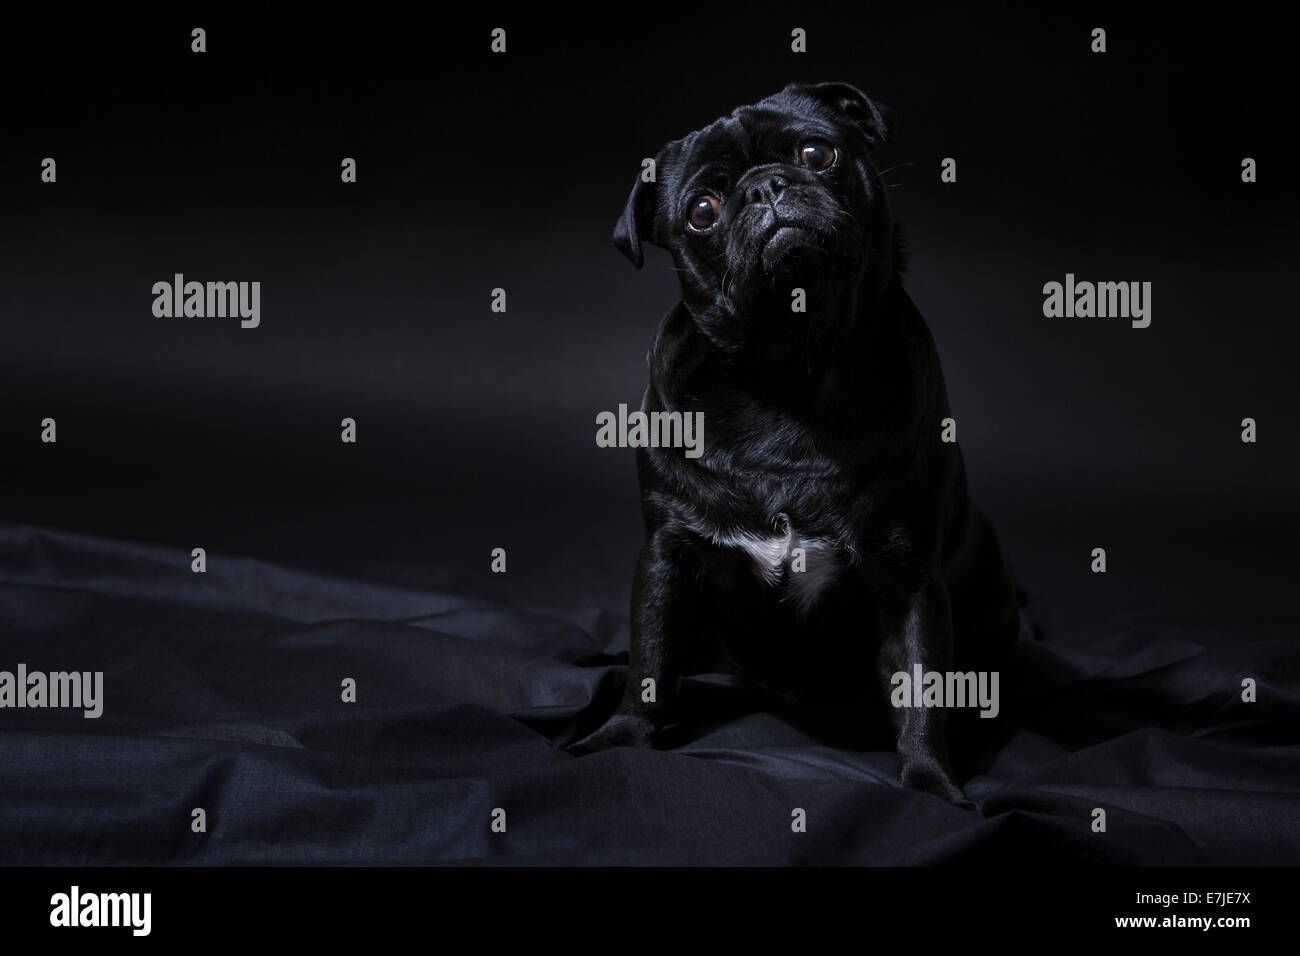 Domestic animal, Pet, dog, pug, fatty, portrait, four-legged, animal, dark, one, elegant, sweet, black, black background, sit, s Stock Photo